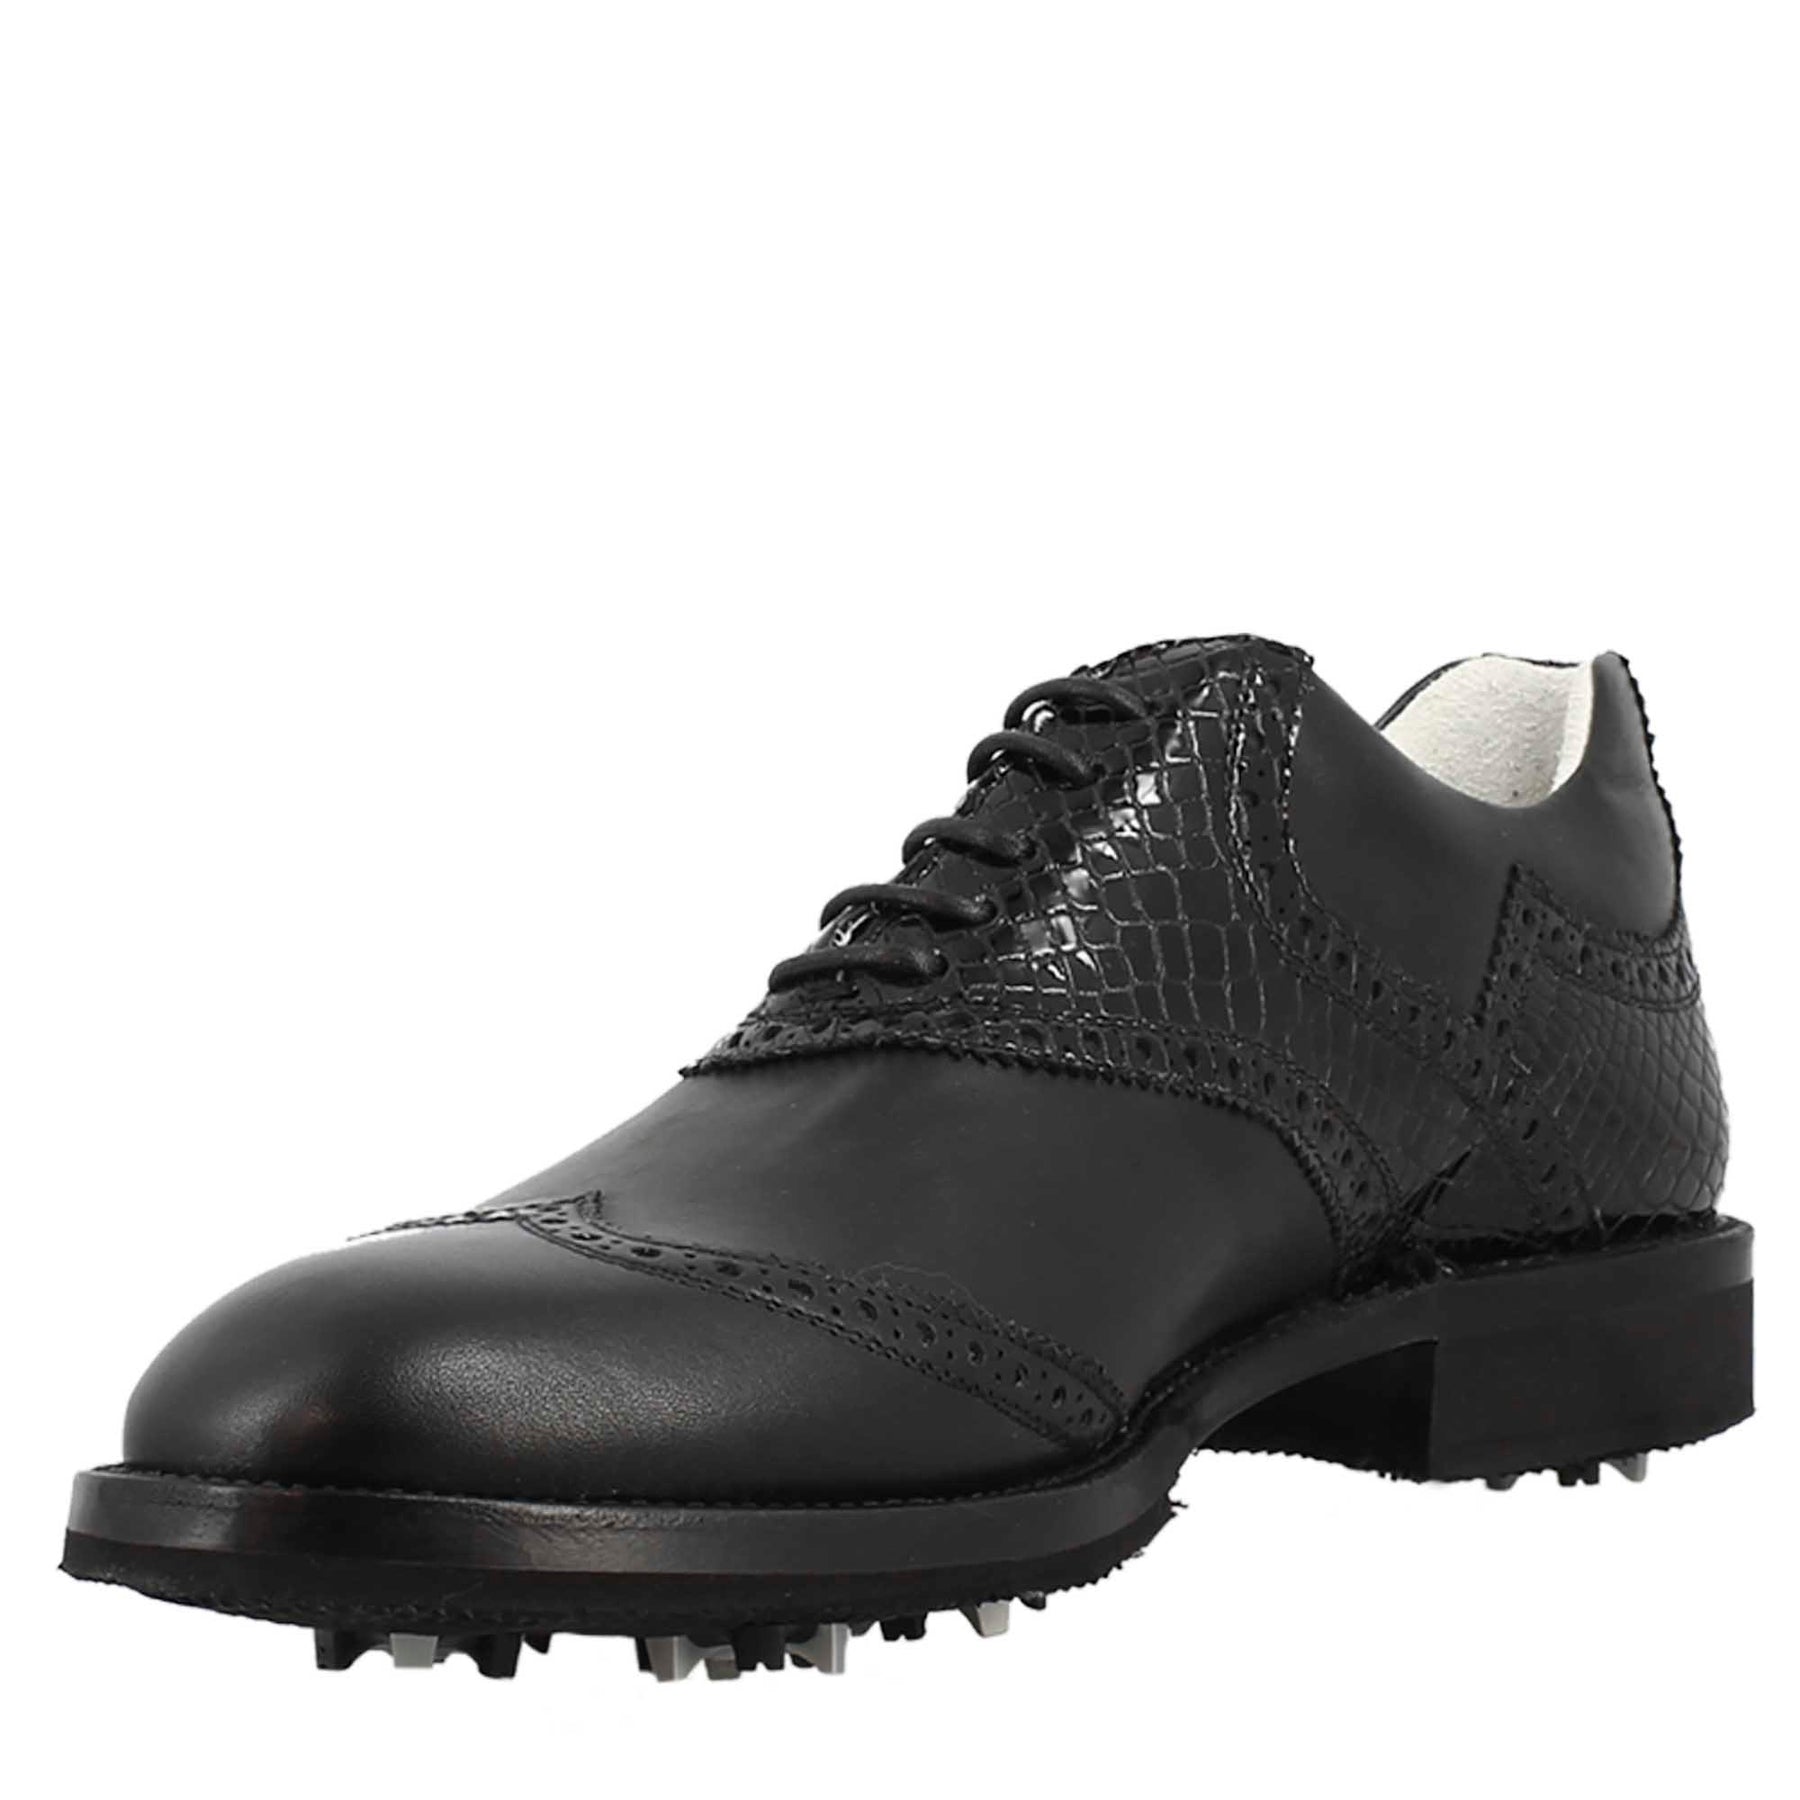 Men's golf shoes black coconut leather handcrafted brogue details